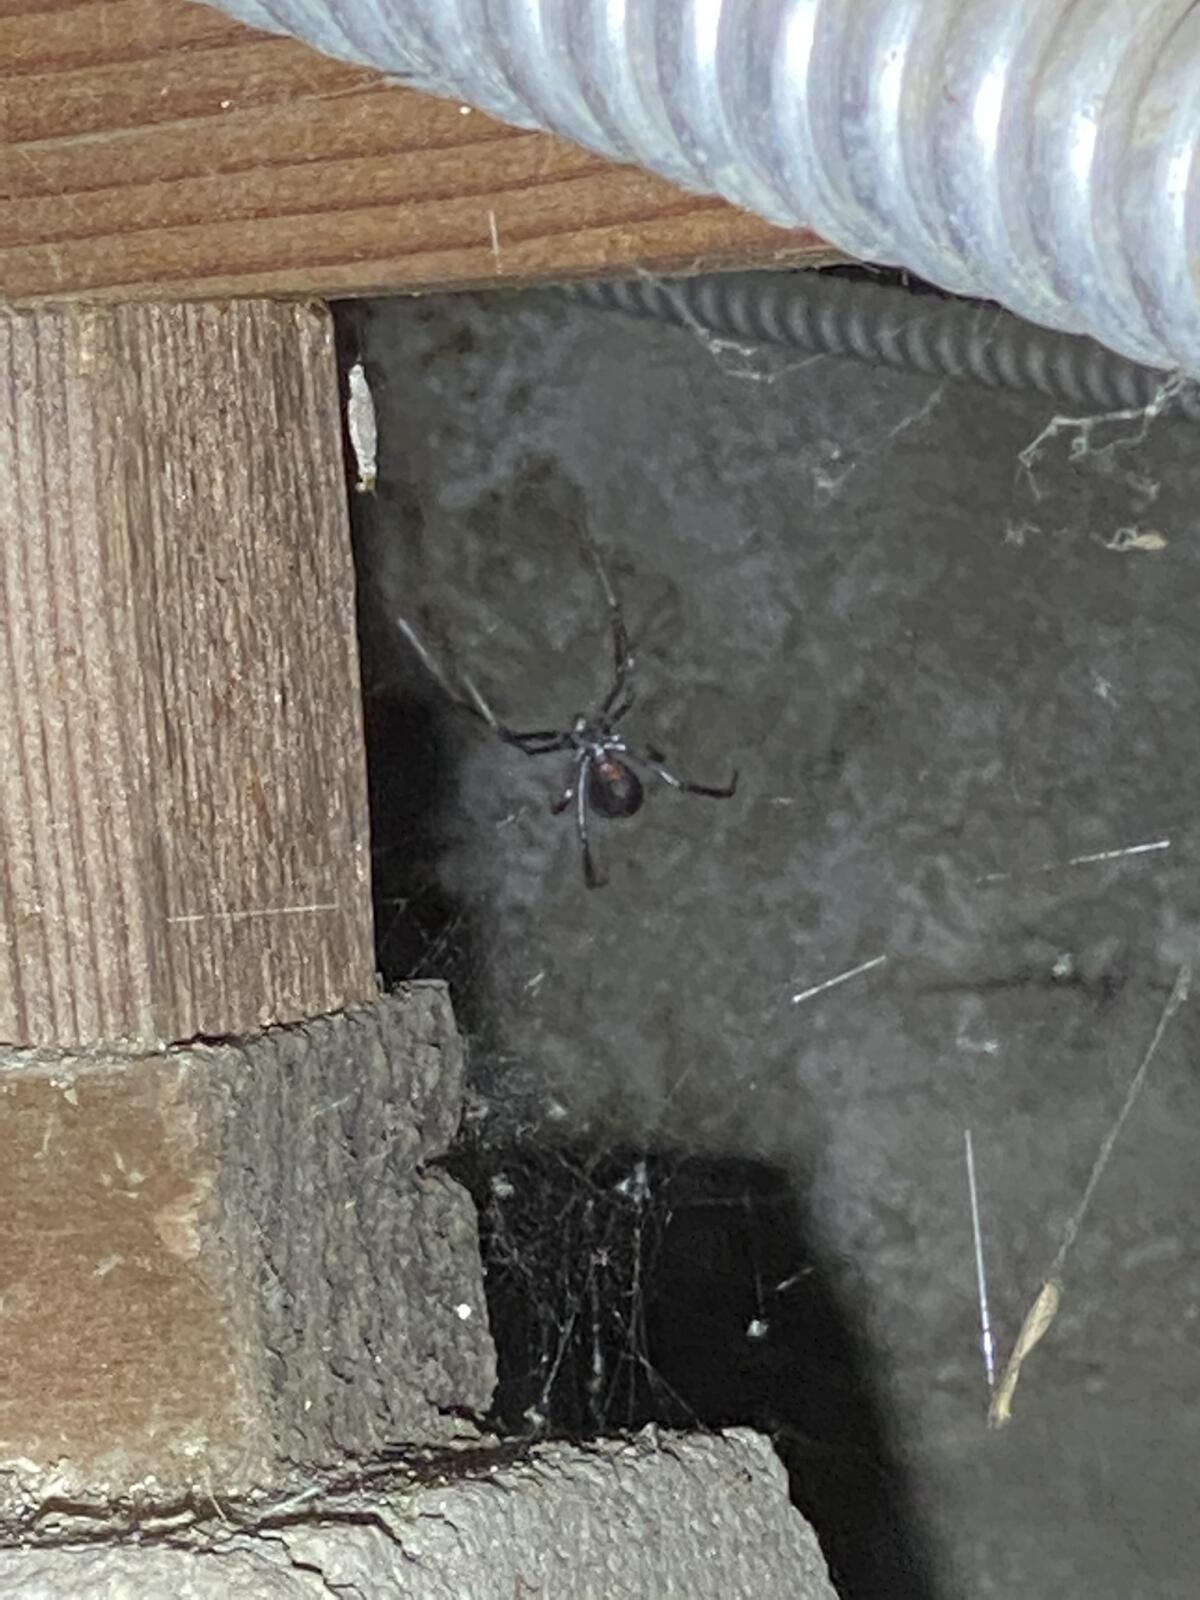 A black widow spider in a crawl space. 